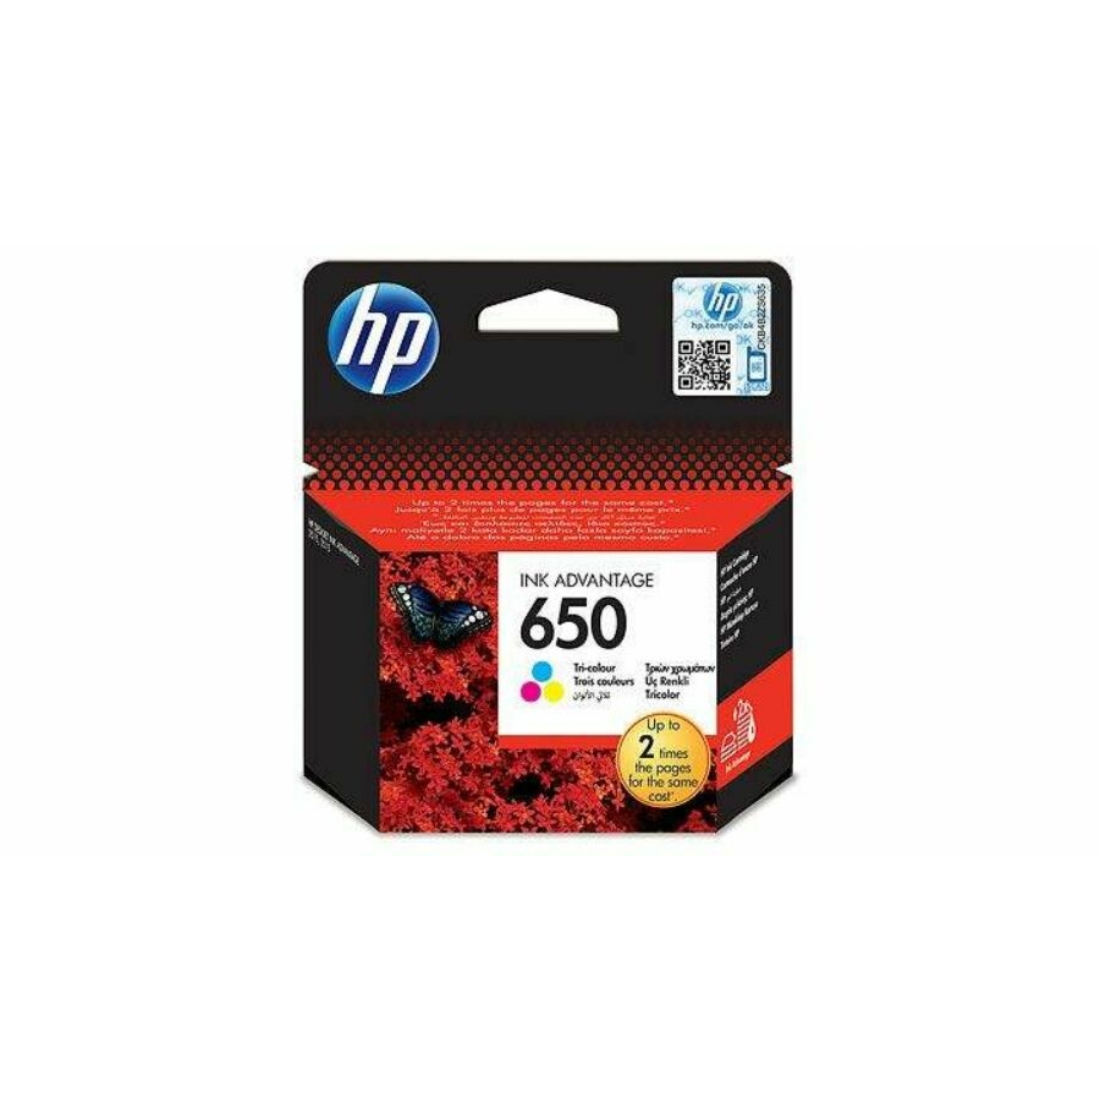 HP CZ102AE No.650 színes eredeti tintapatron